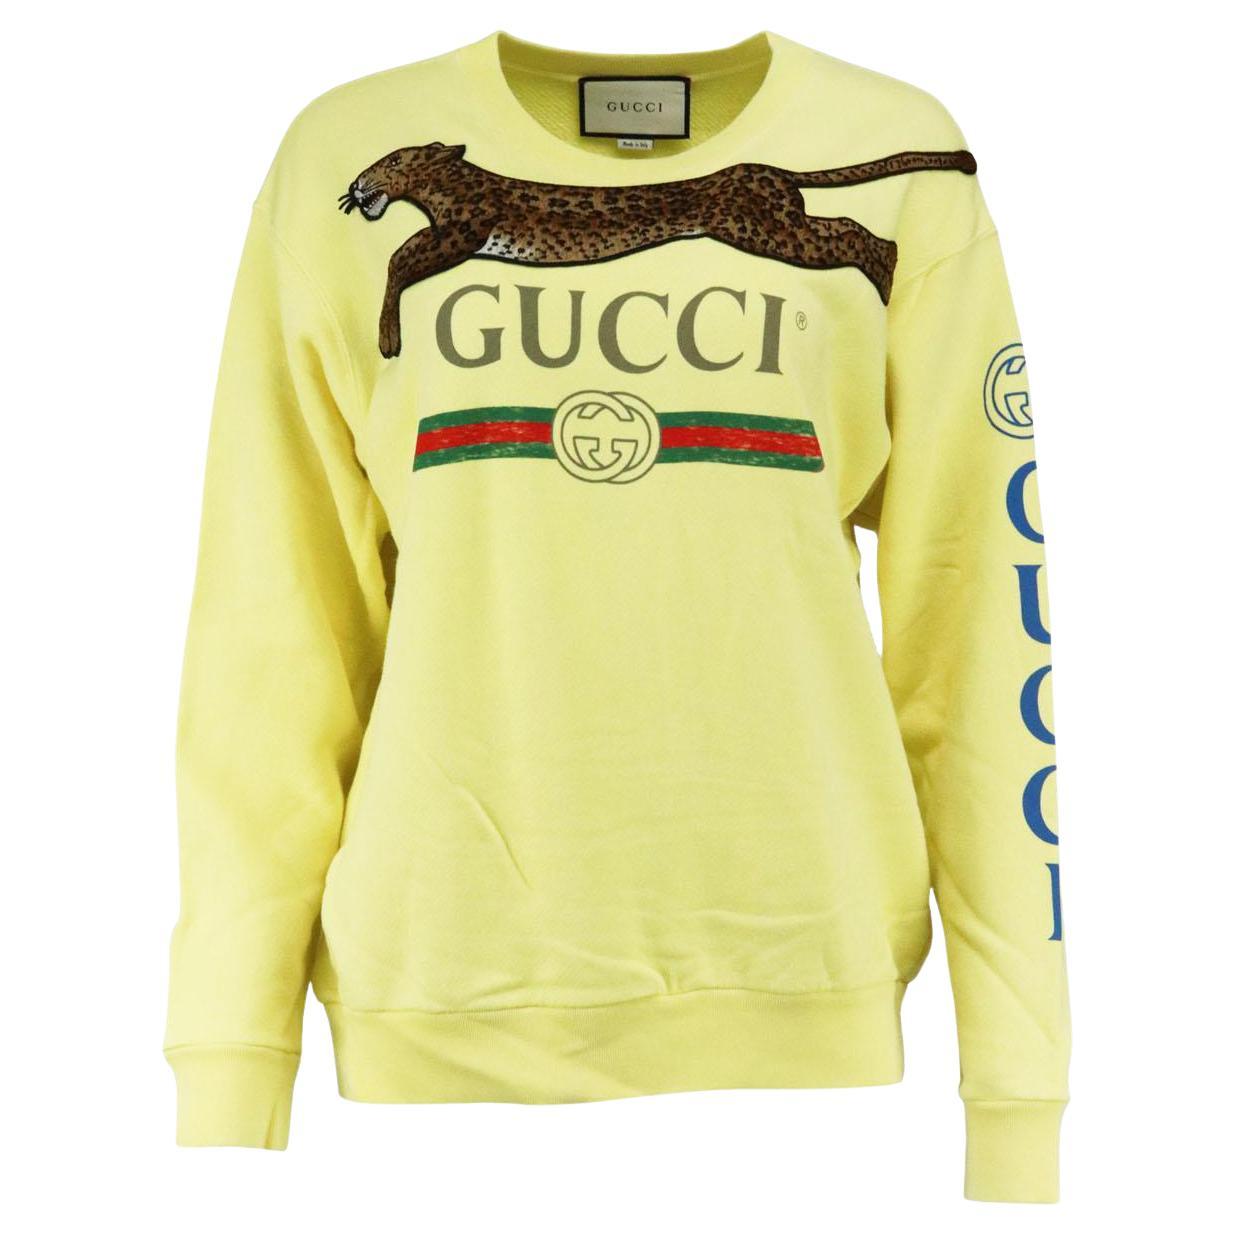 Gucci Oversized Appliquéd Printed Cotton Terry Sweatshirt Small